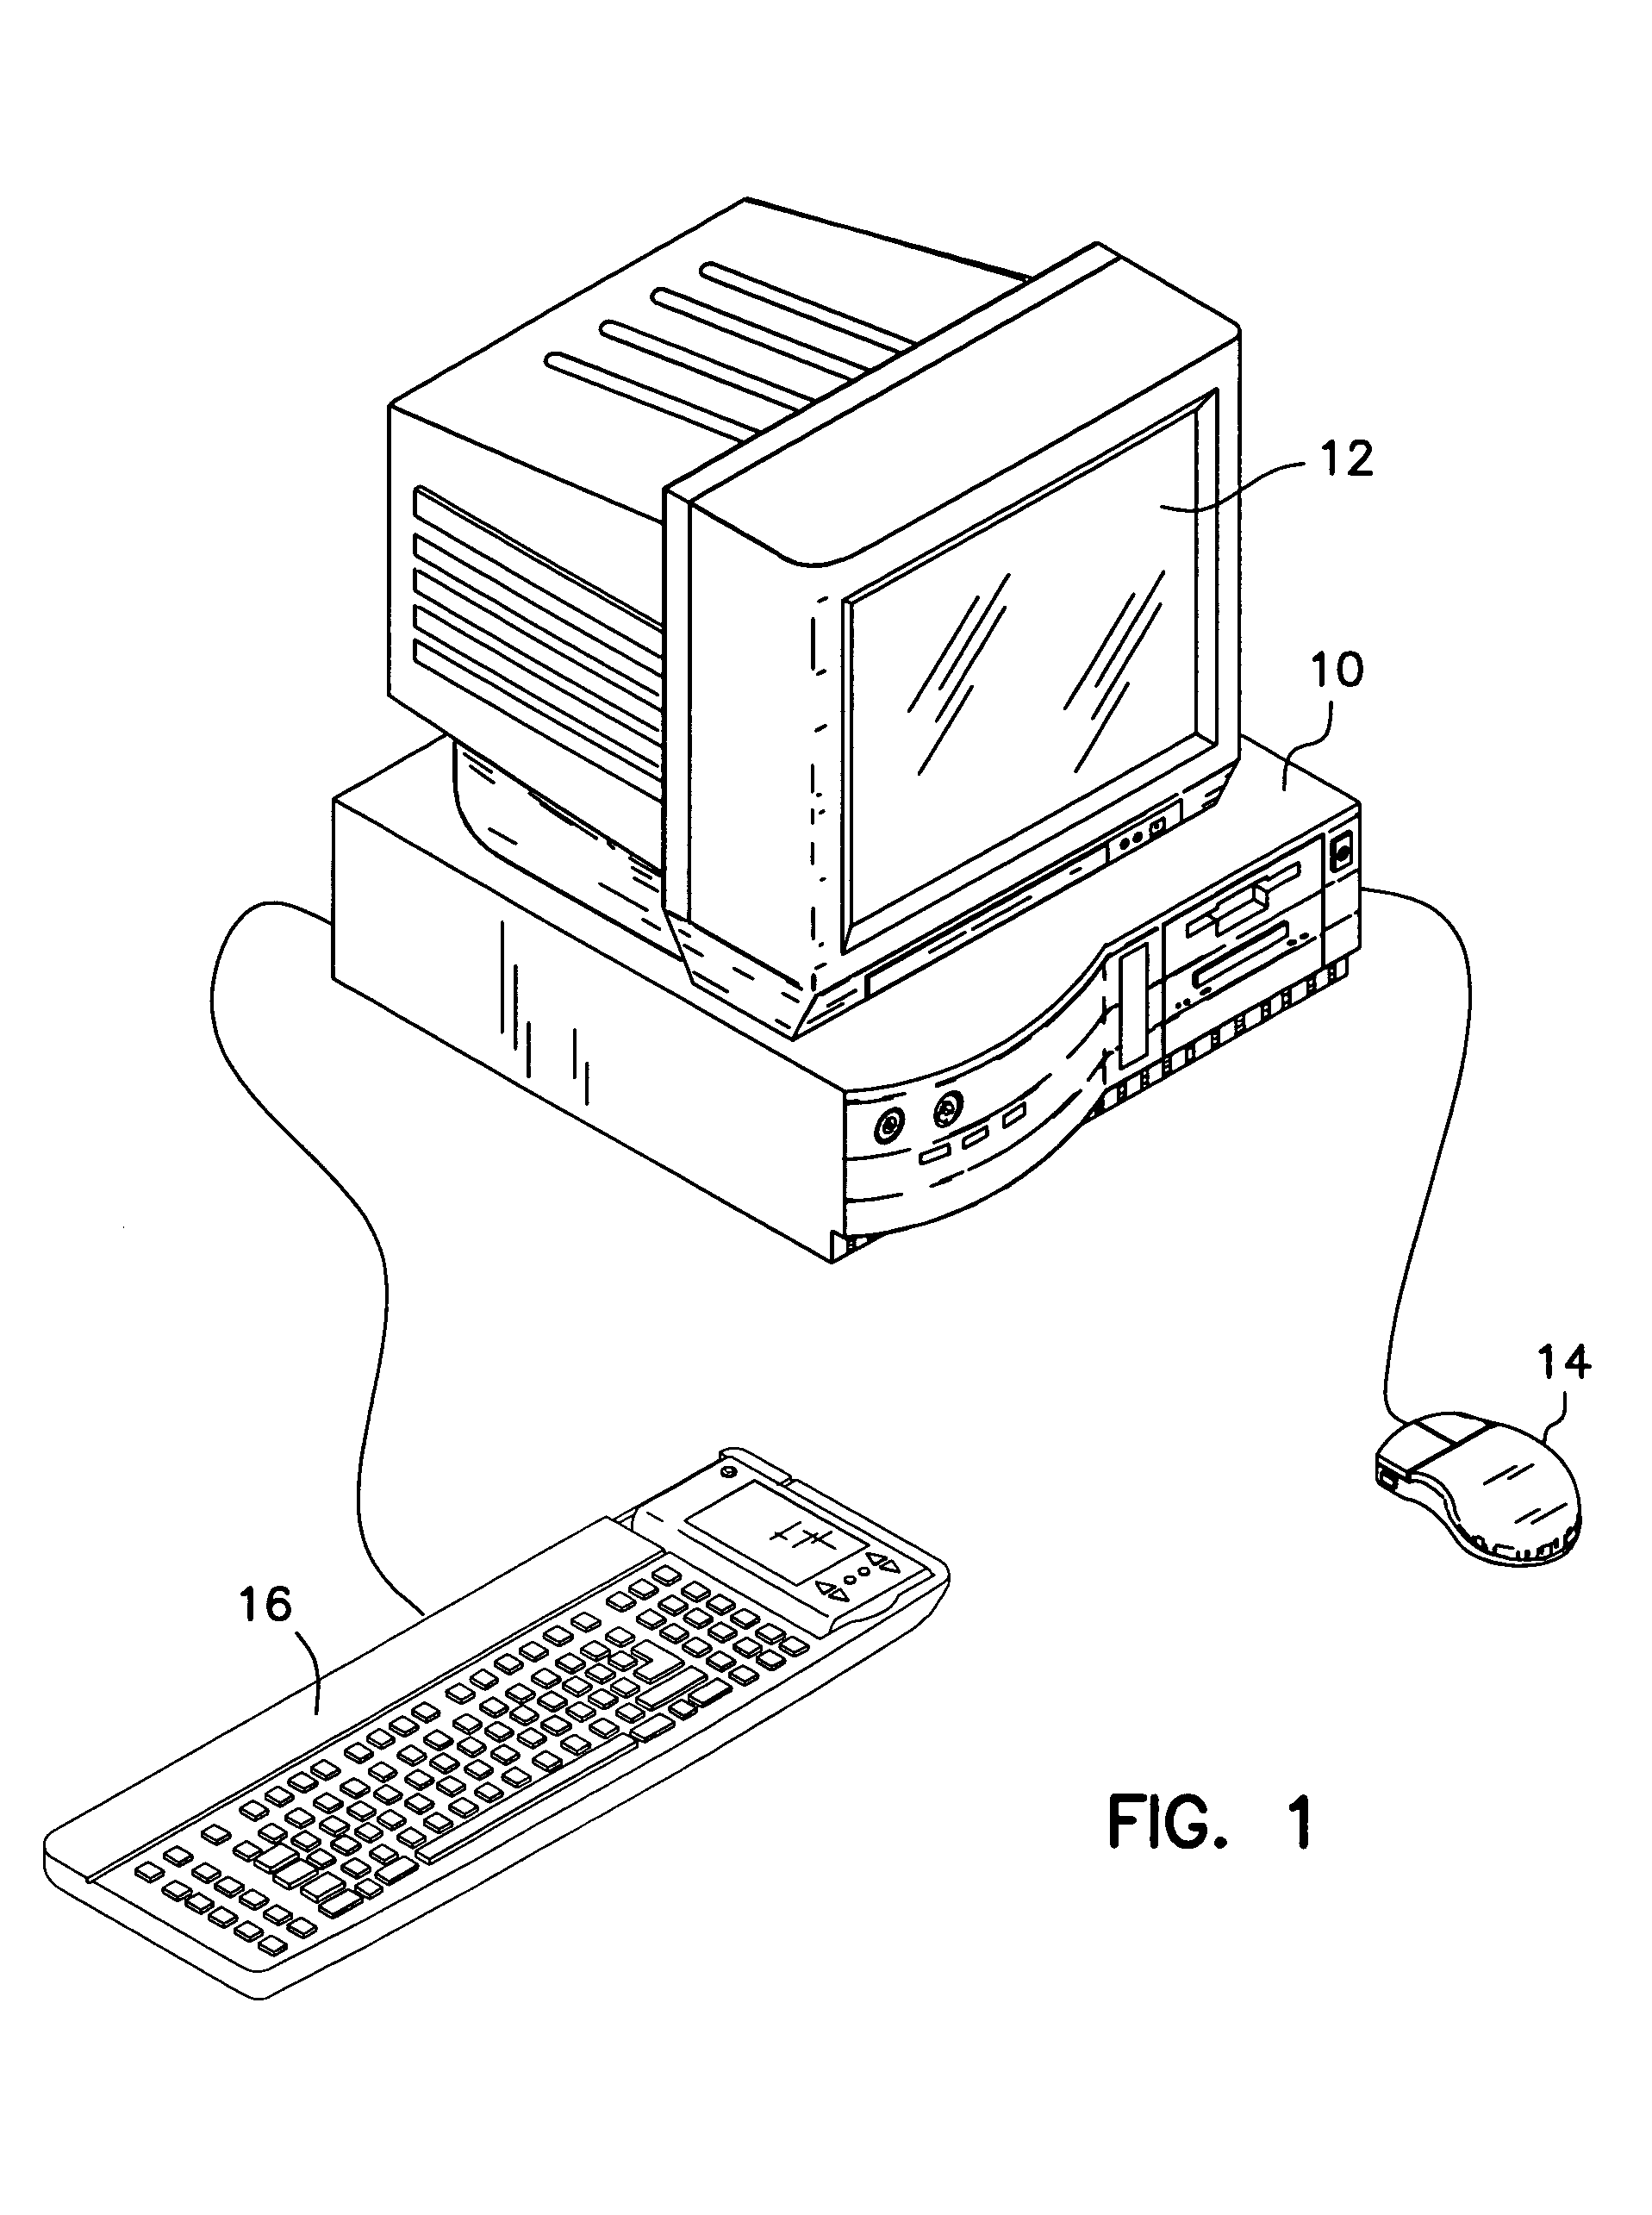 Modular computer device and computer keyboard for modular device